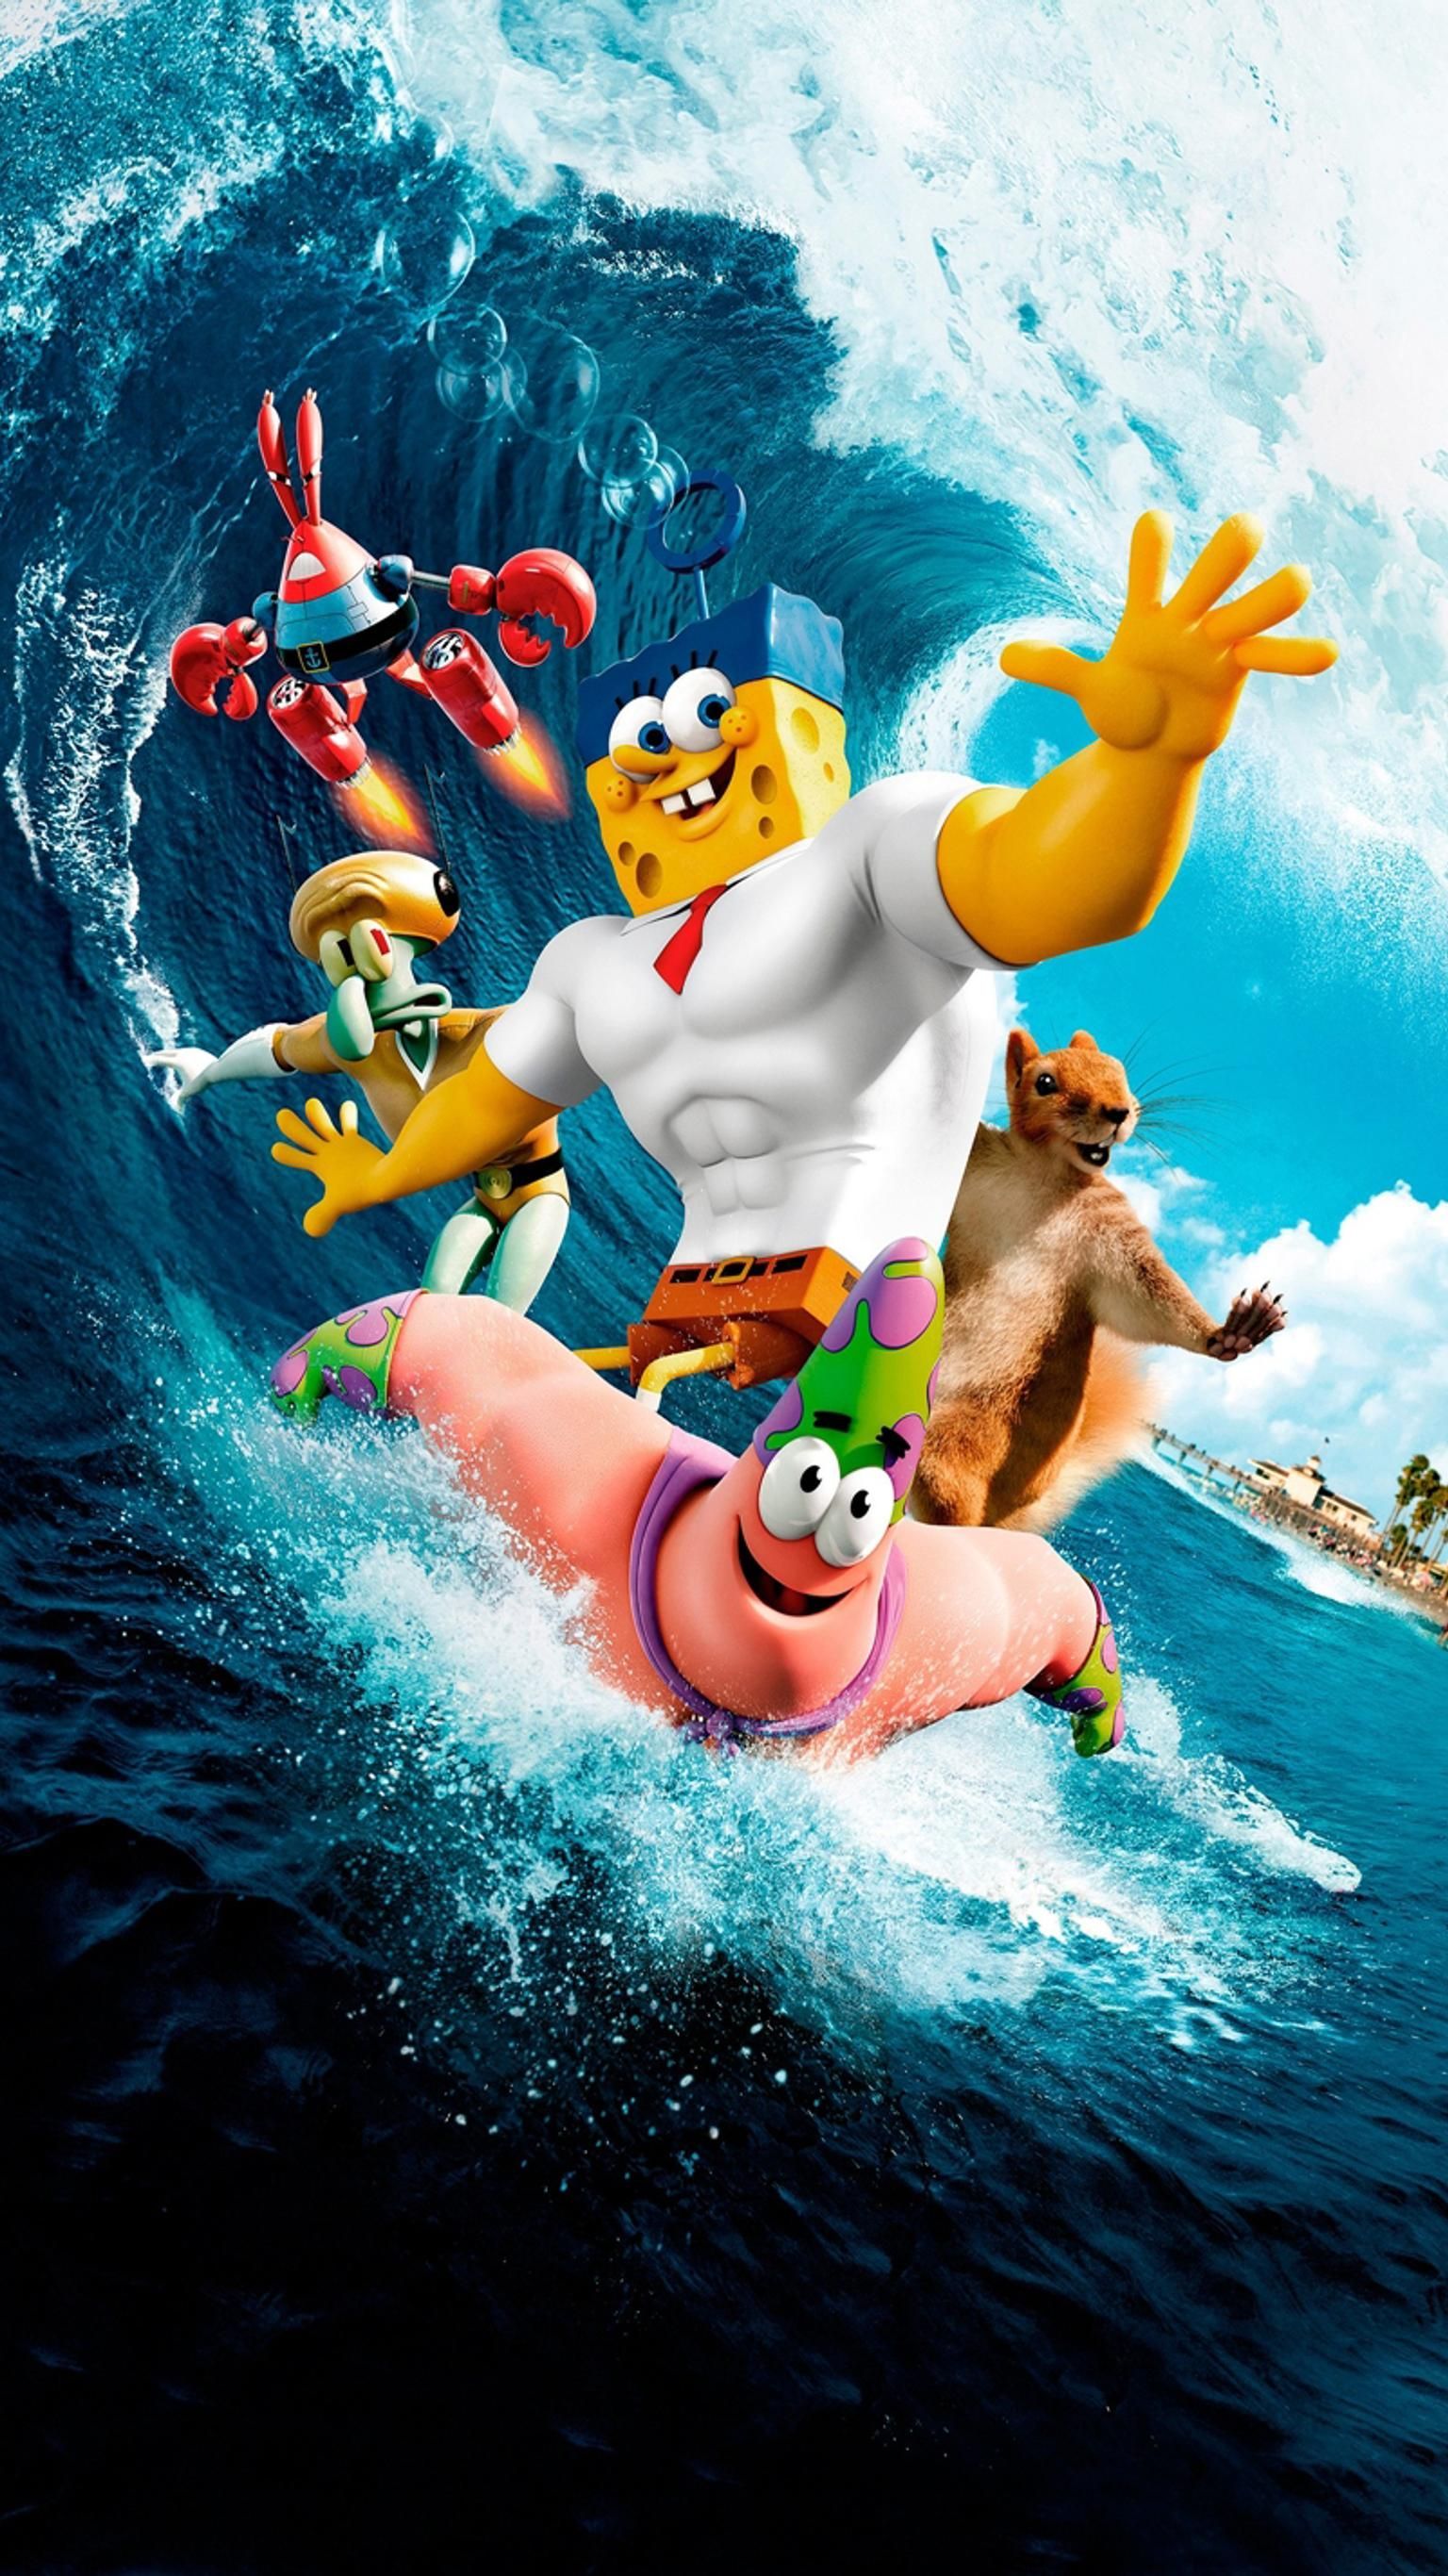 The Spongebob Movie Sponge Out Of Water Concept Art B - vrogue.co